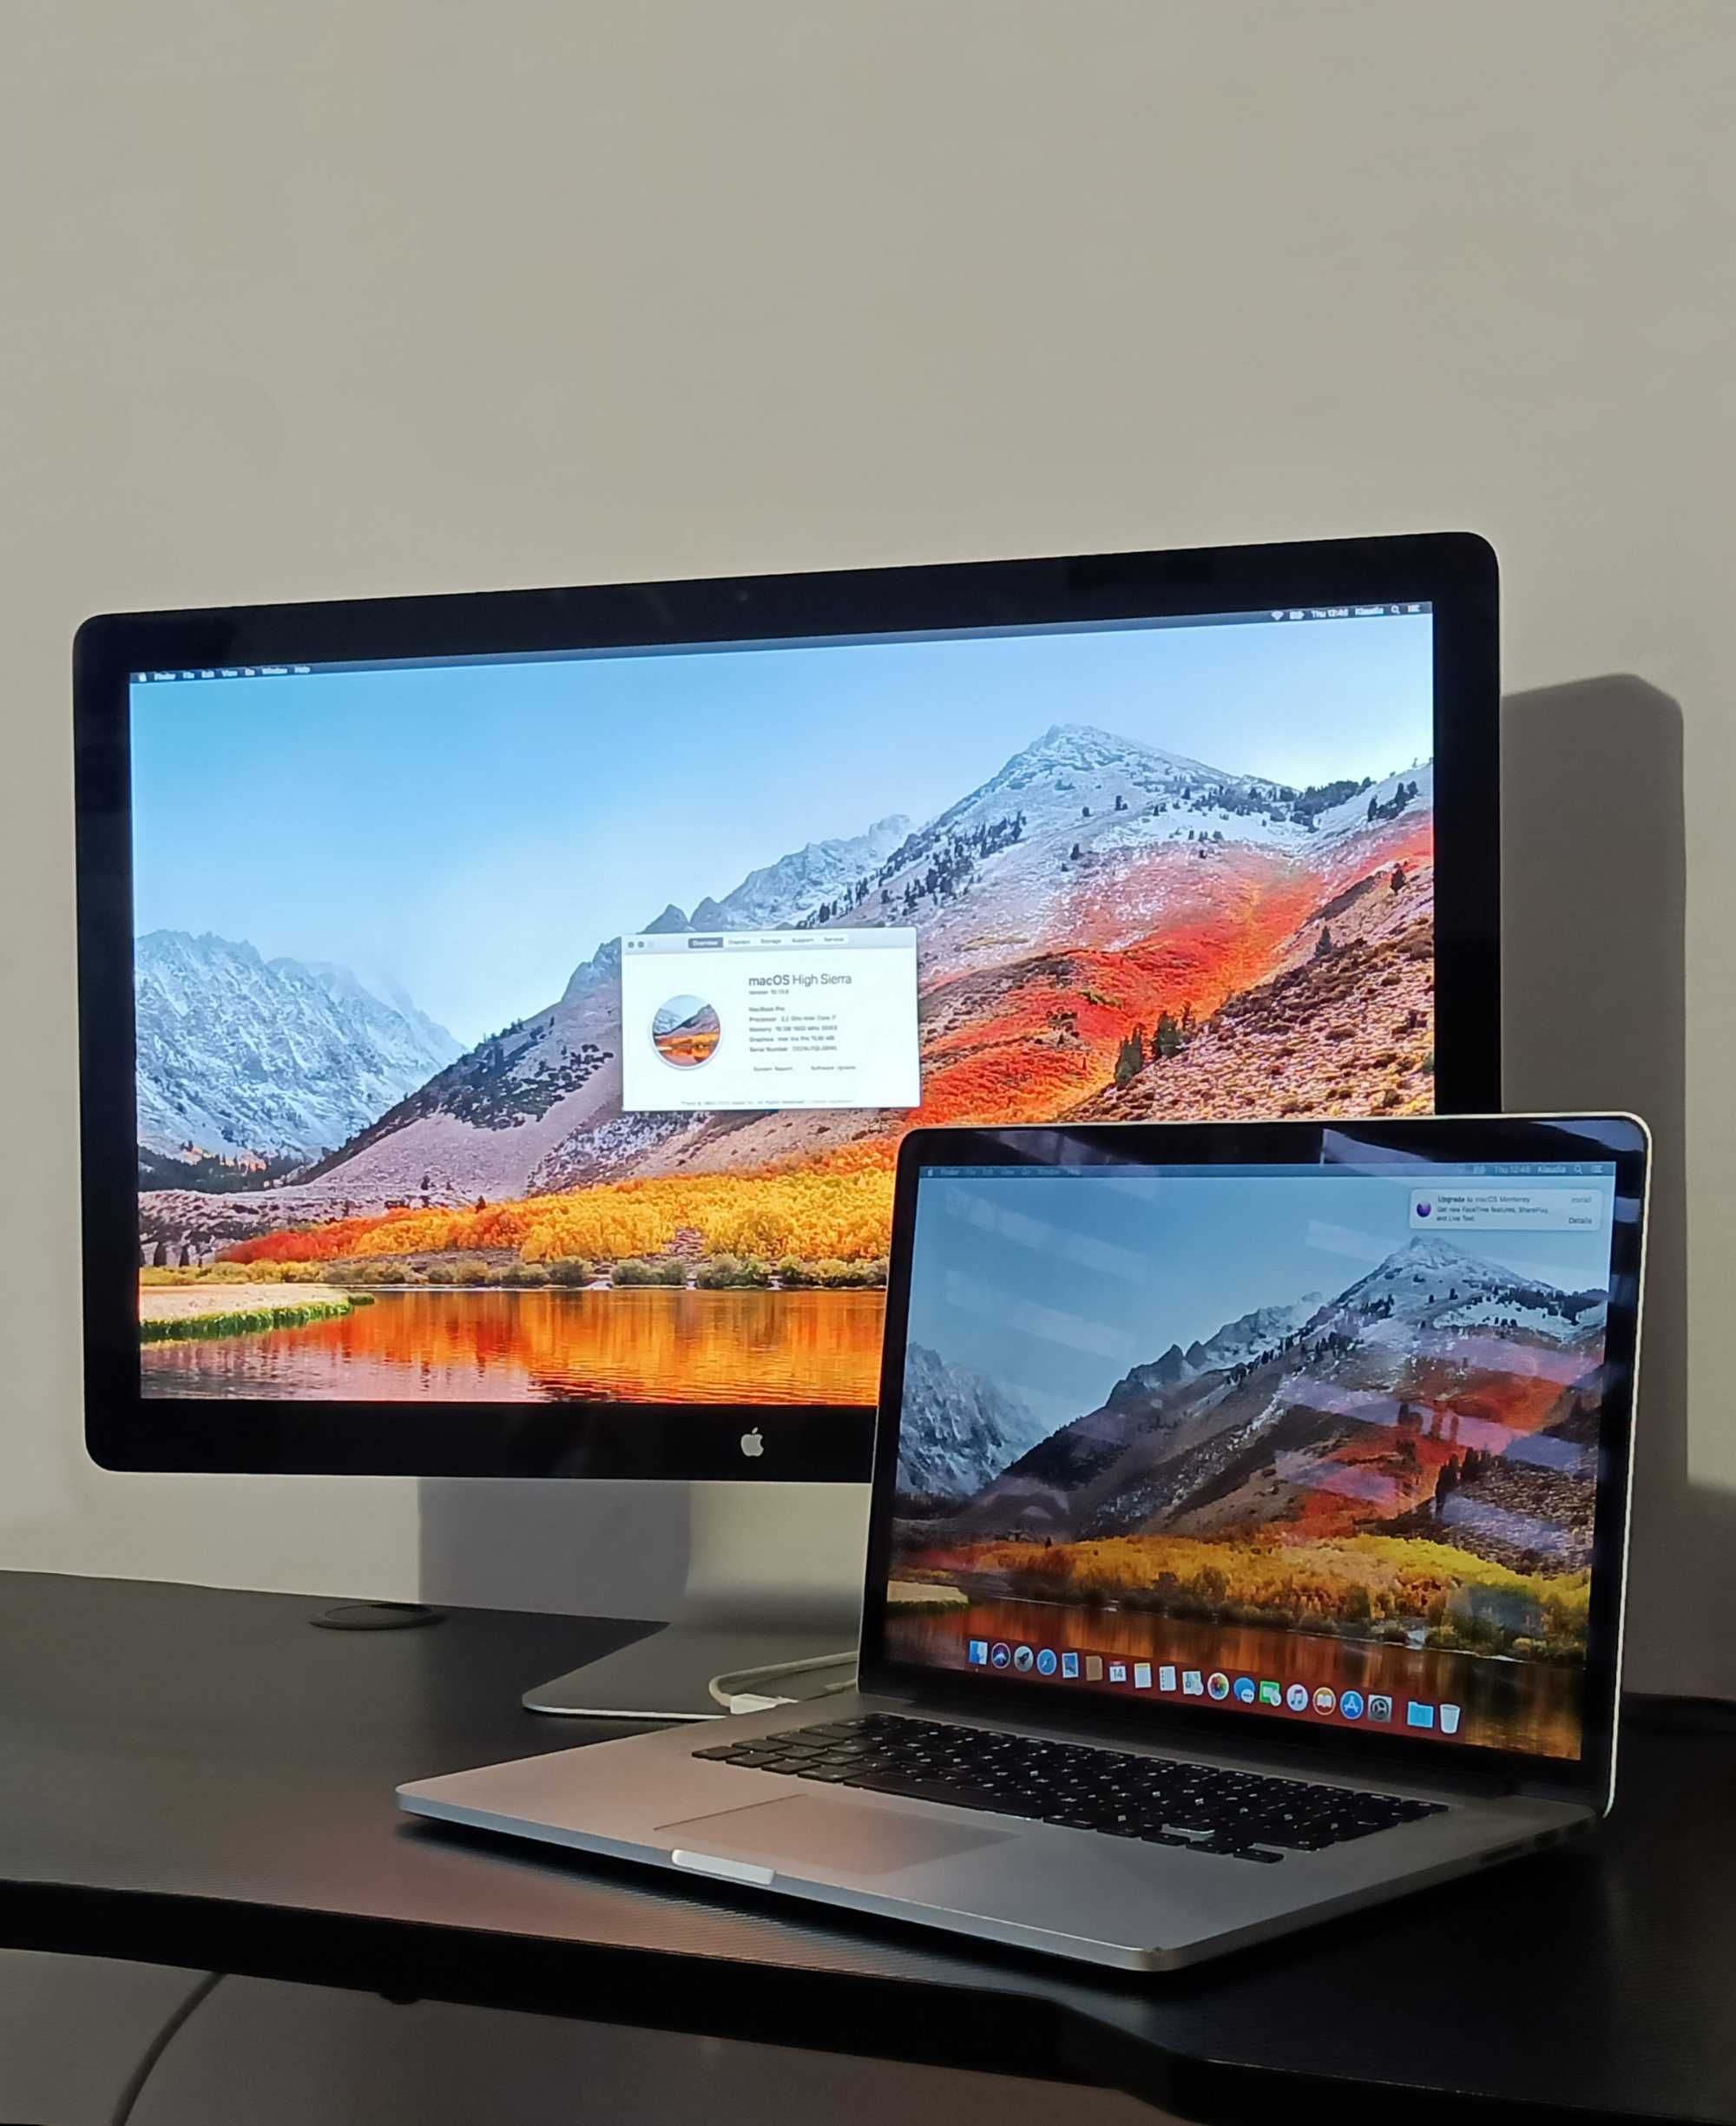 Macbook pro a1398 16/512gb 15'4" i monitor Apple Thunderbolt 27"